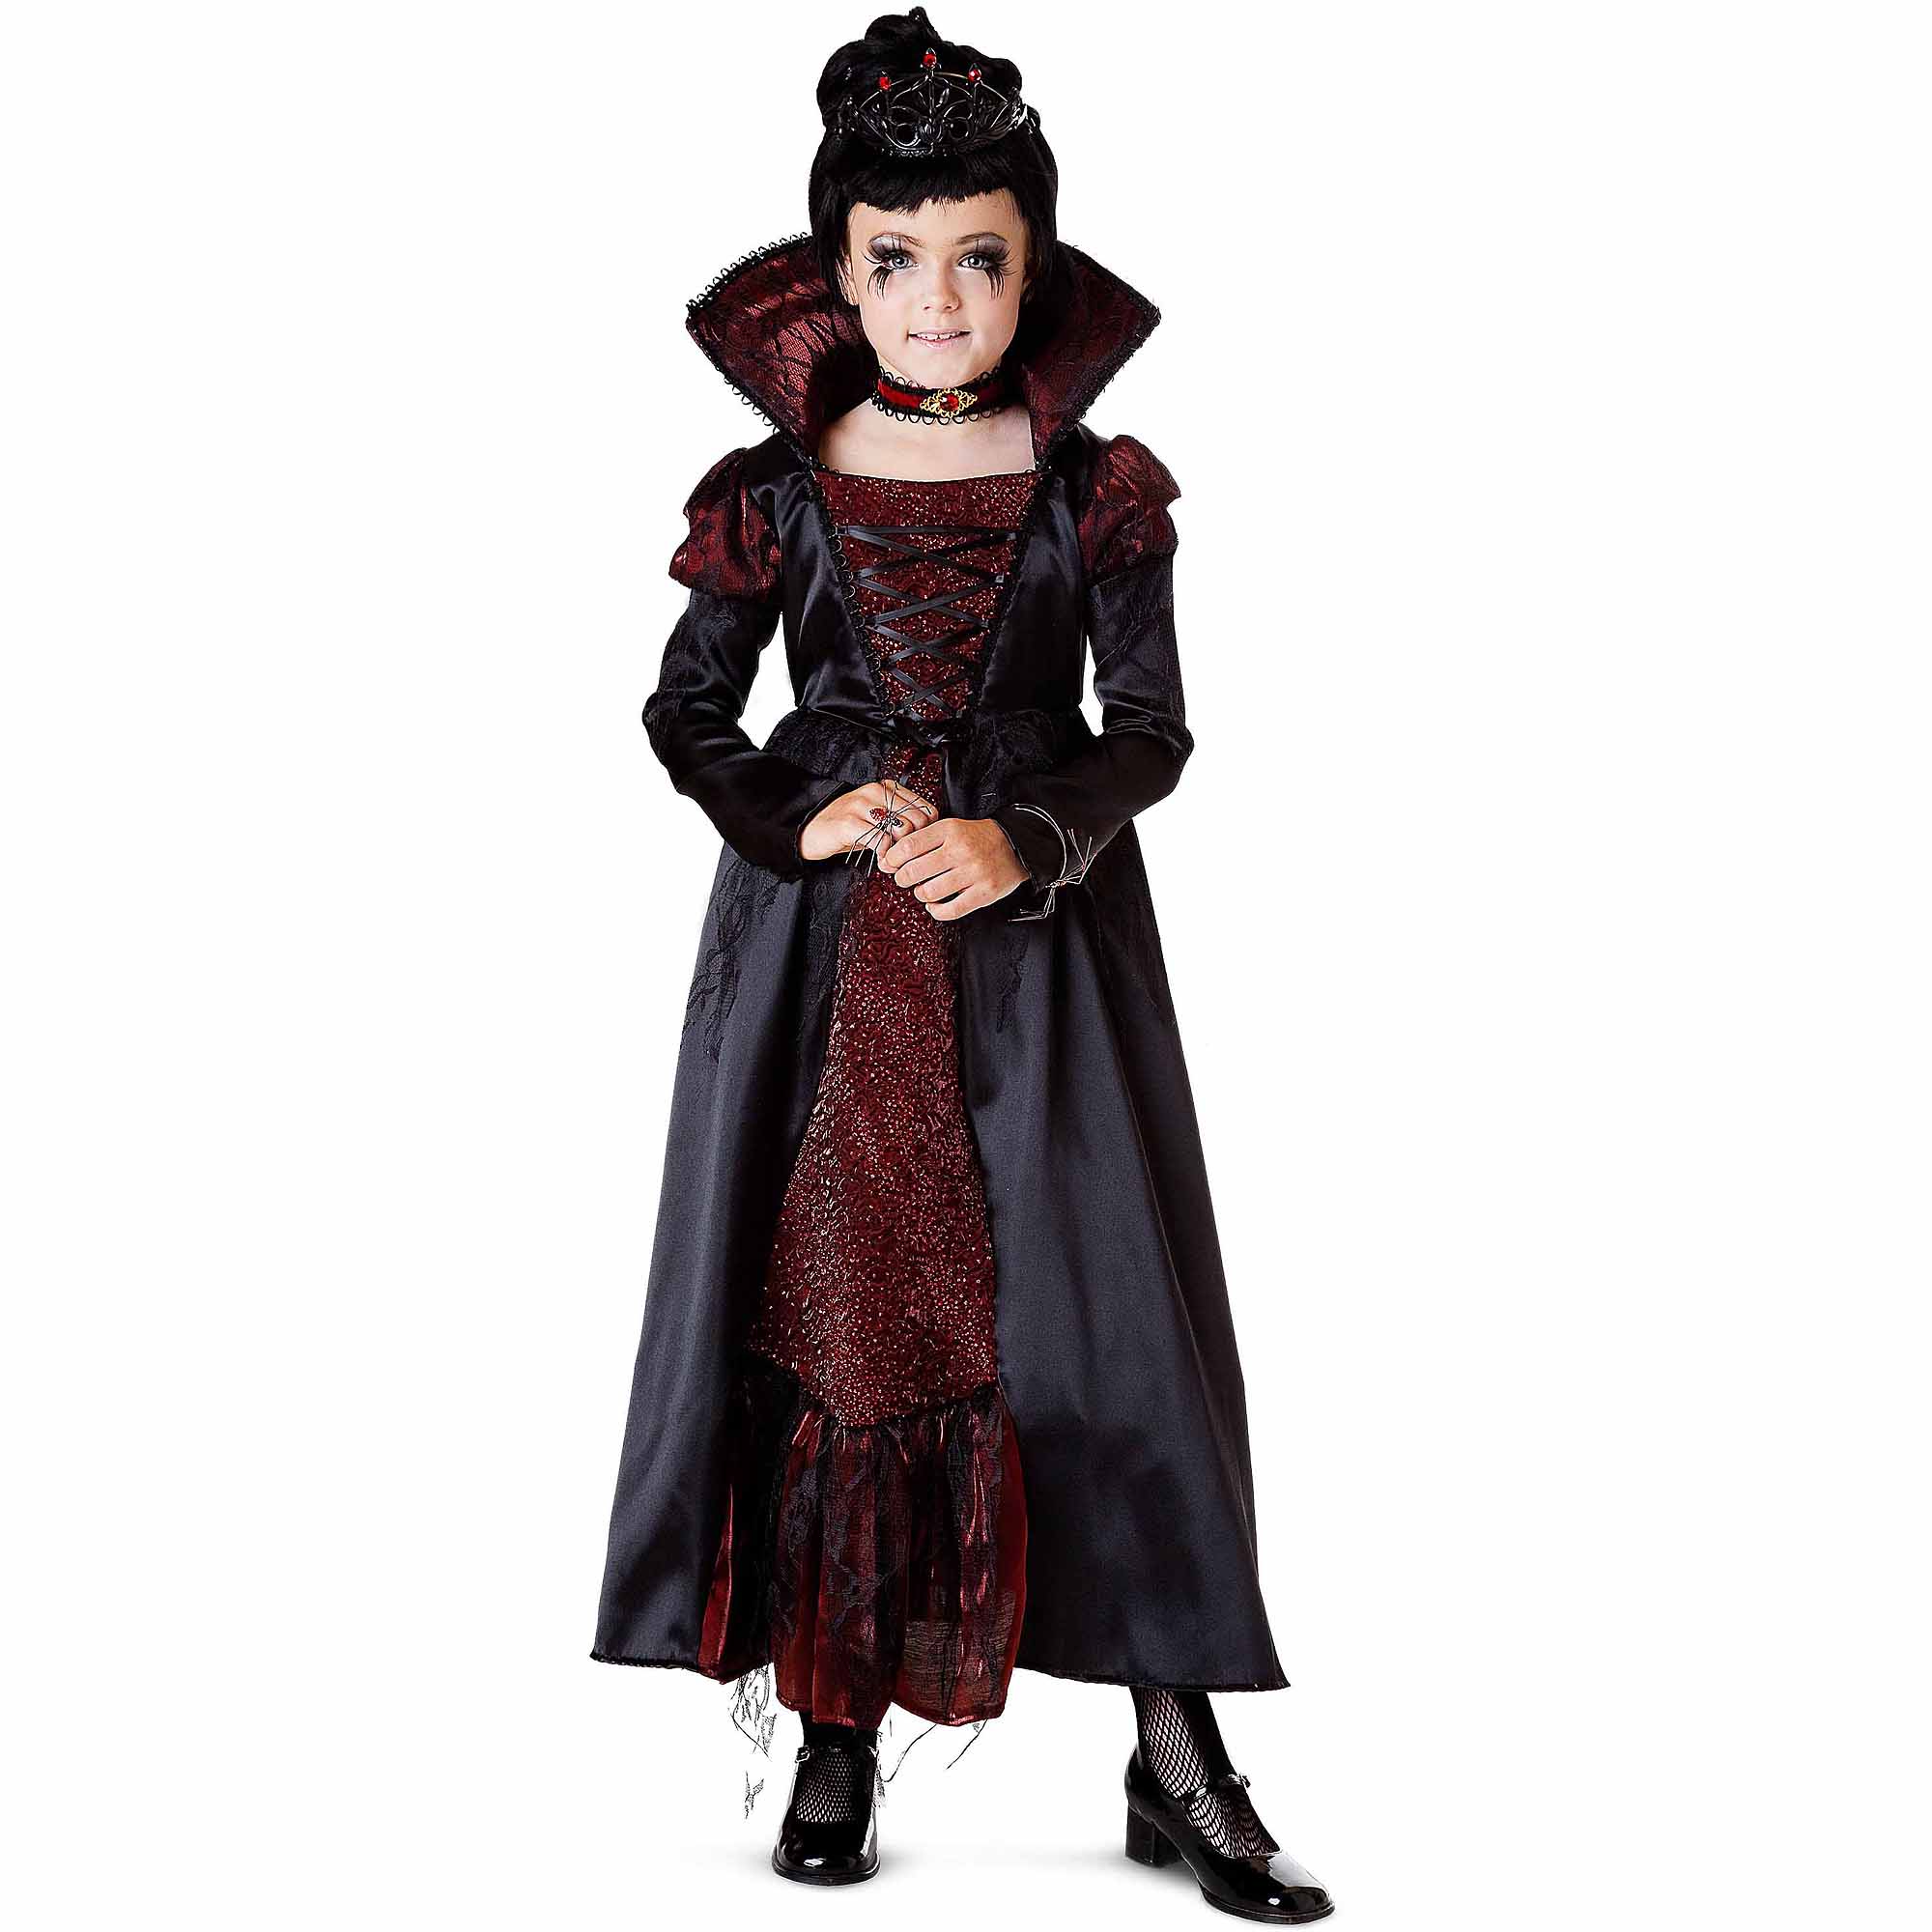 Rubie's Transylvanian Vampiress Girl's Halloween Fancy-Dress Costume for Child, S - image 1 of 4